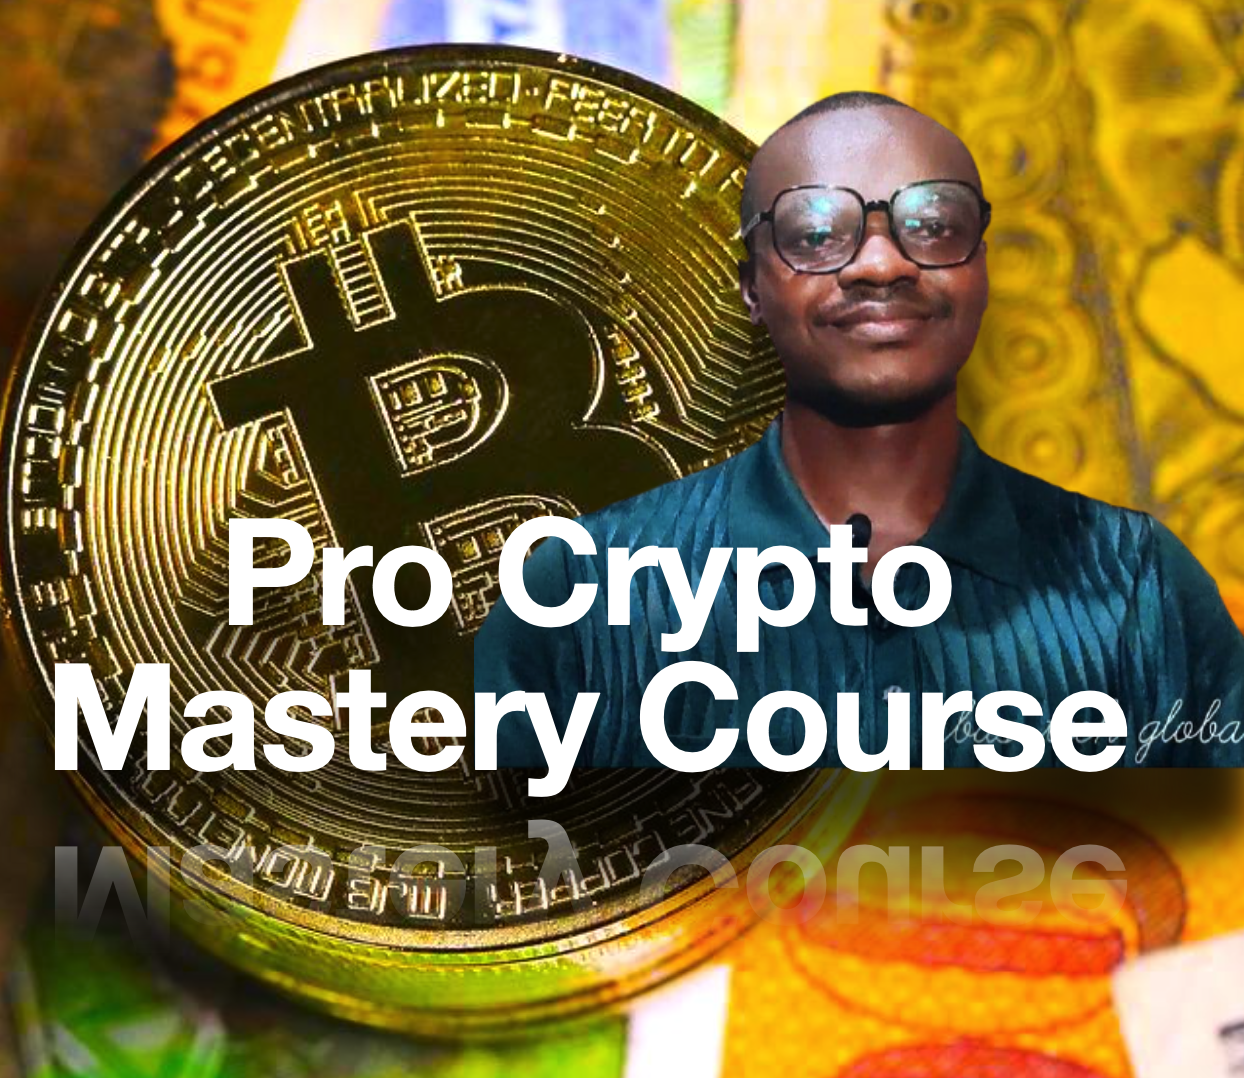 Pro Crypto Mastery Course